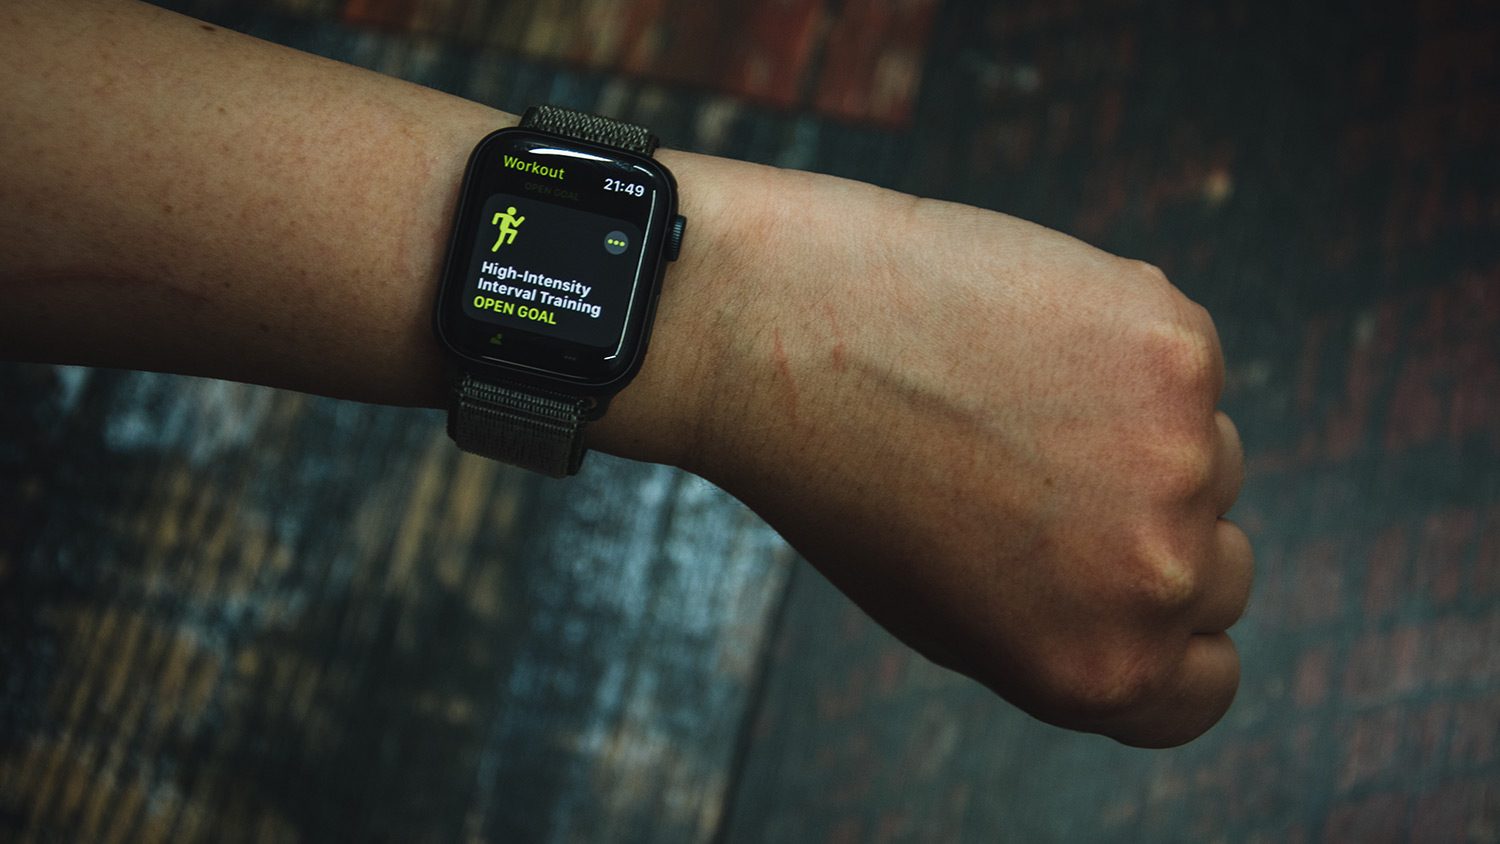 Apple watch on workout app